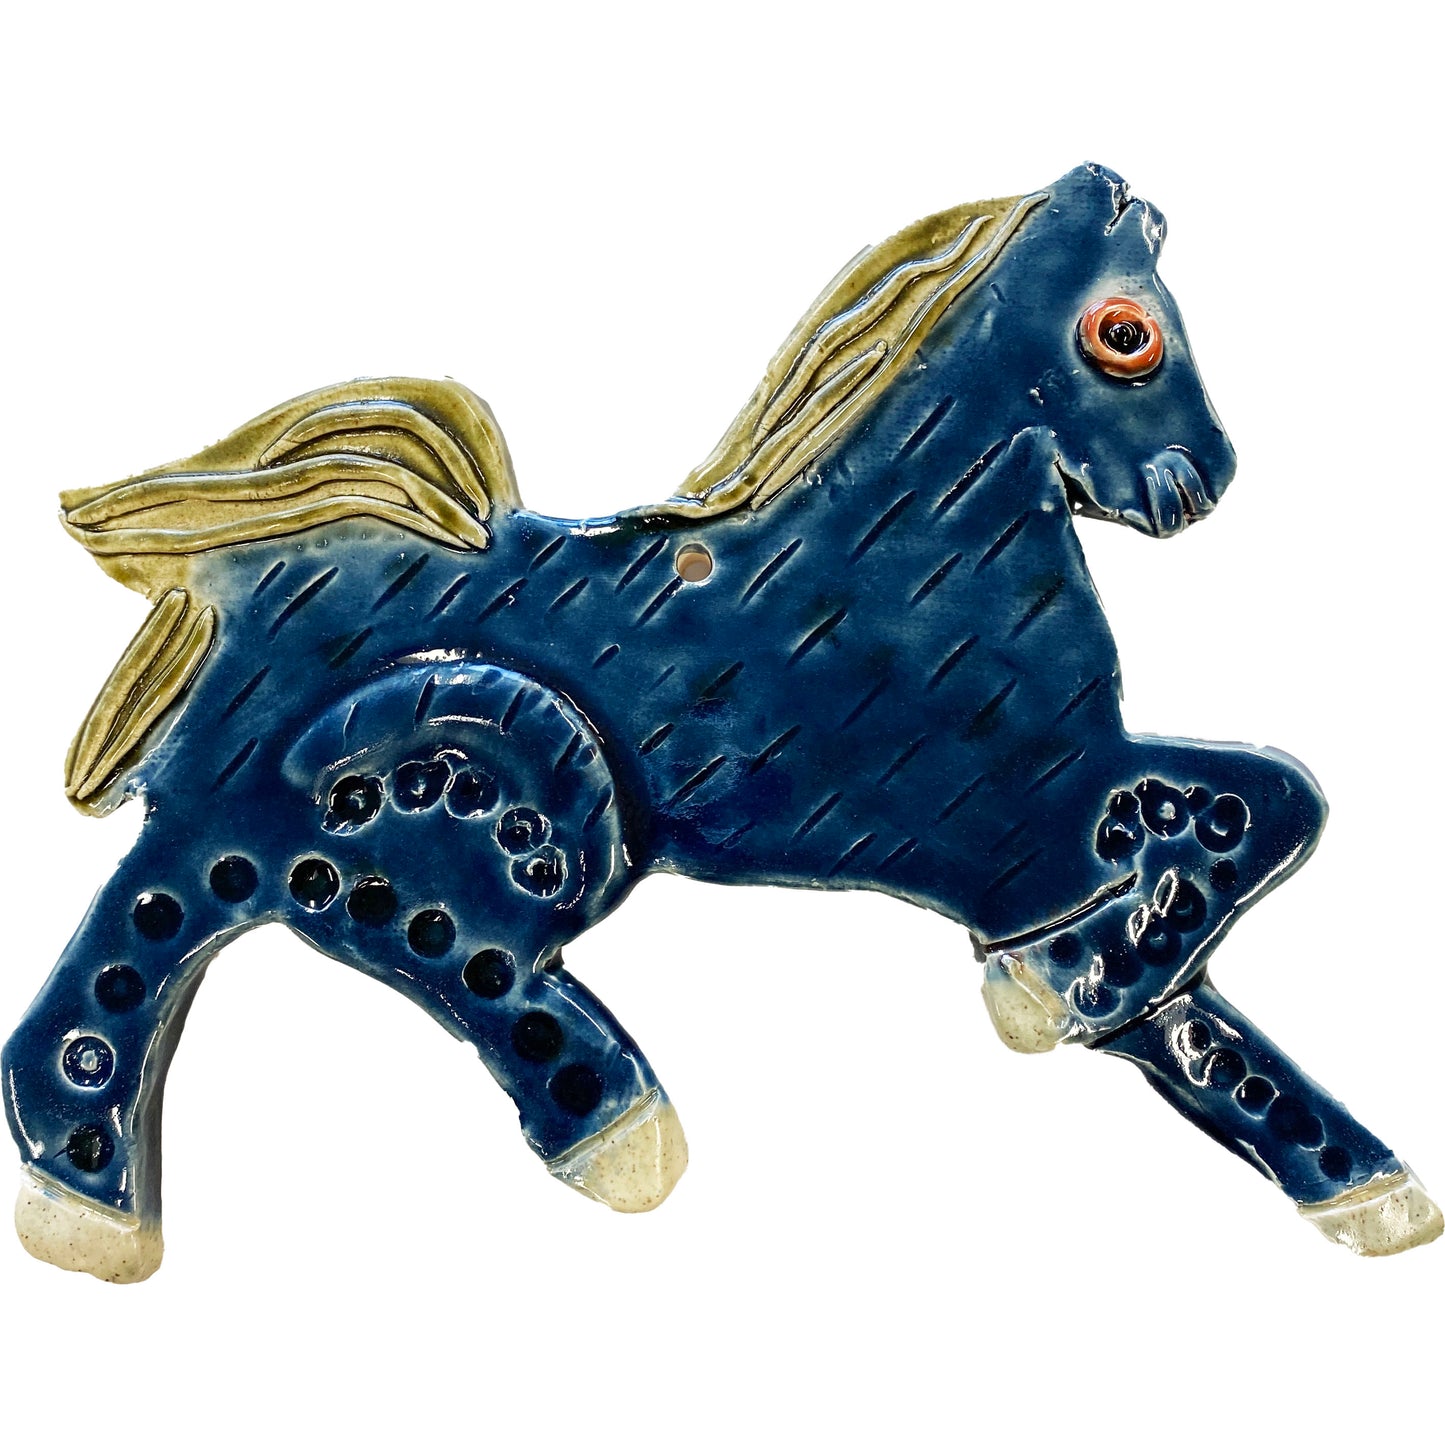 Ceramic Arts Handmade Clay Crafts Glazed 9-inch x 7-inch Horse made by David Sullivan